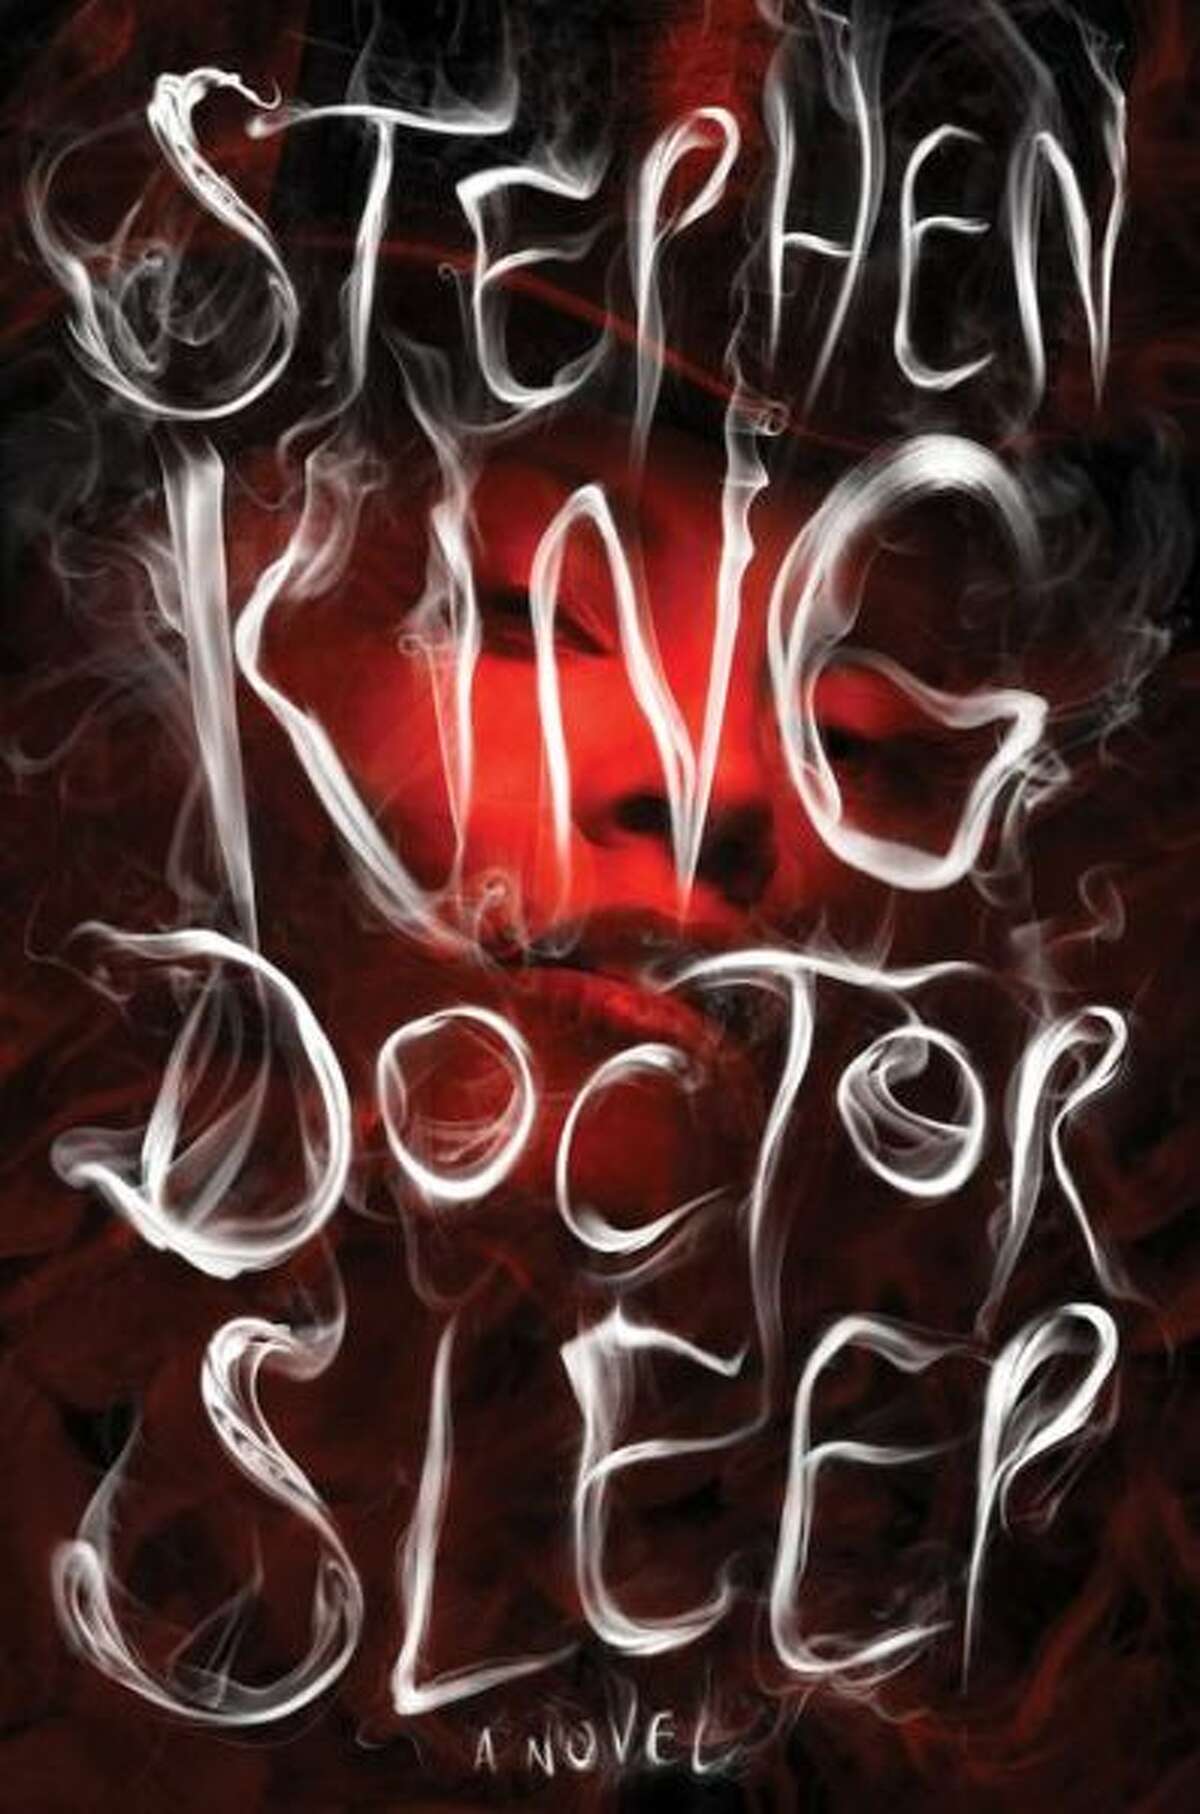 Doctor Sleep, by Stephen King